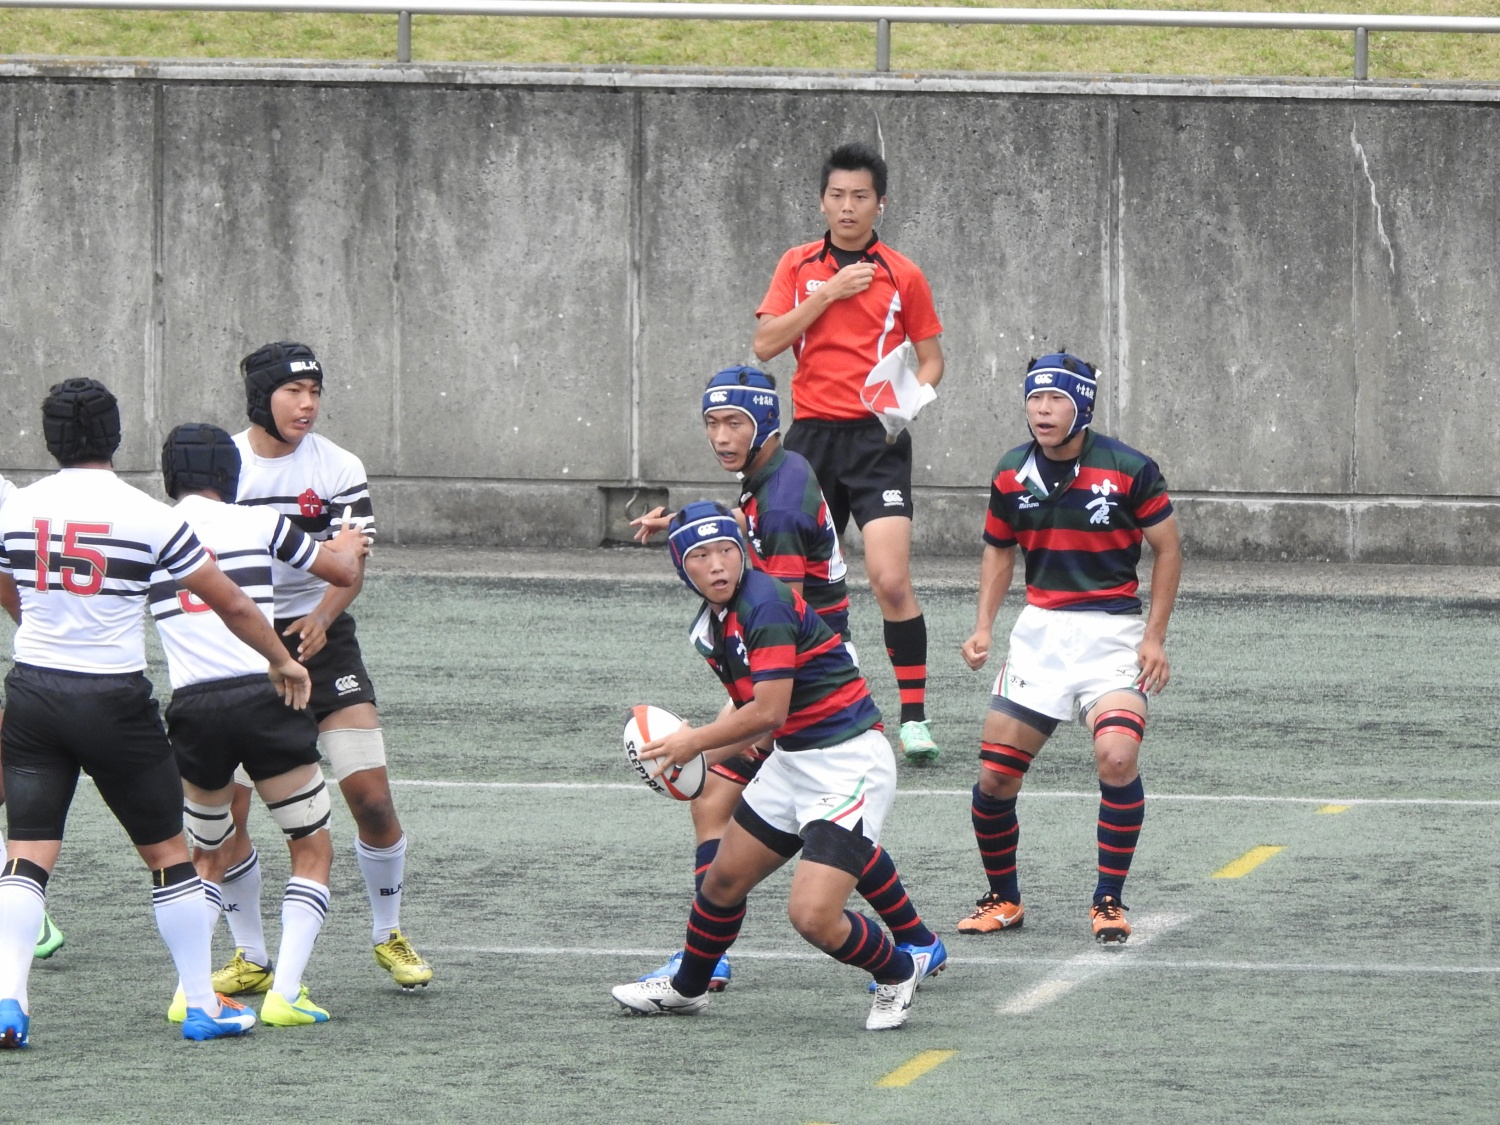 http://kokura-rugby.sakura.ne.jp/DSCN7127_xlarge.JPG